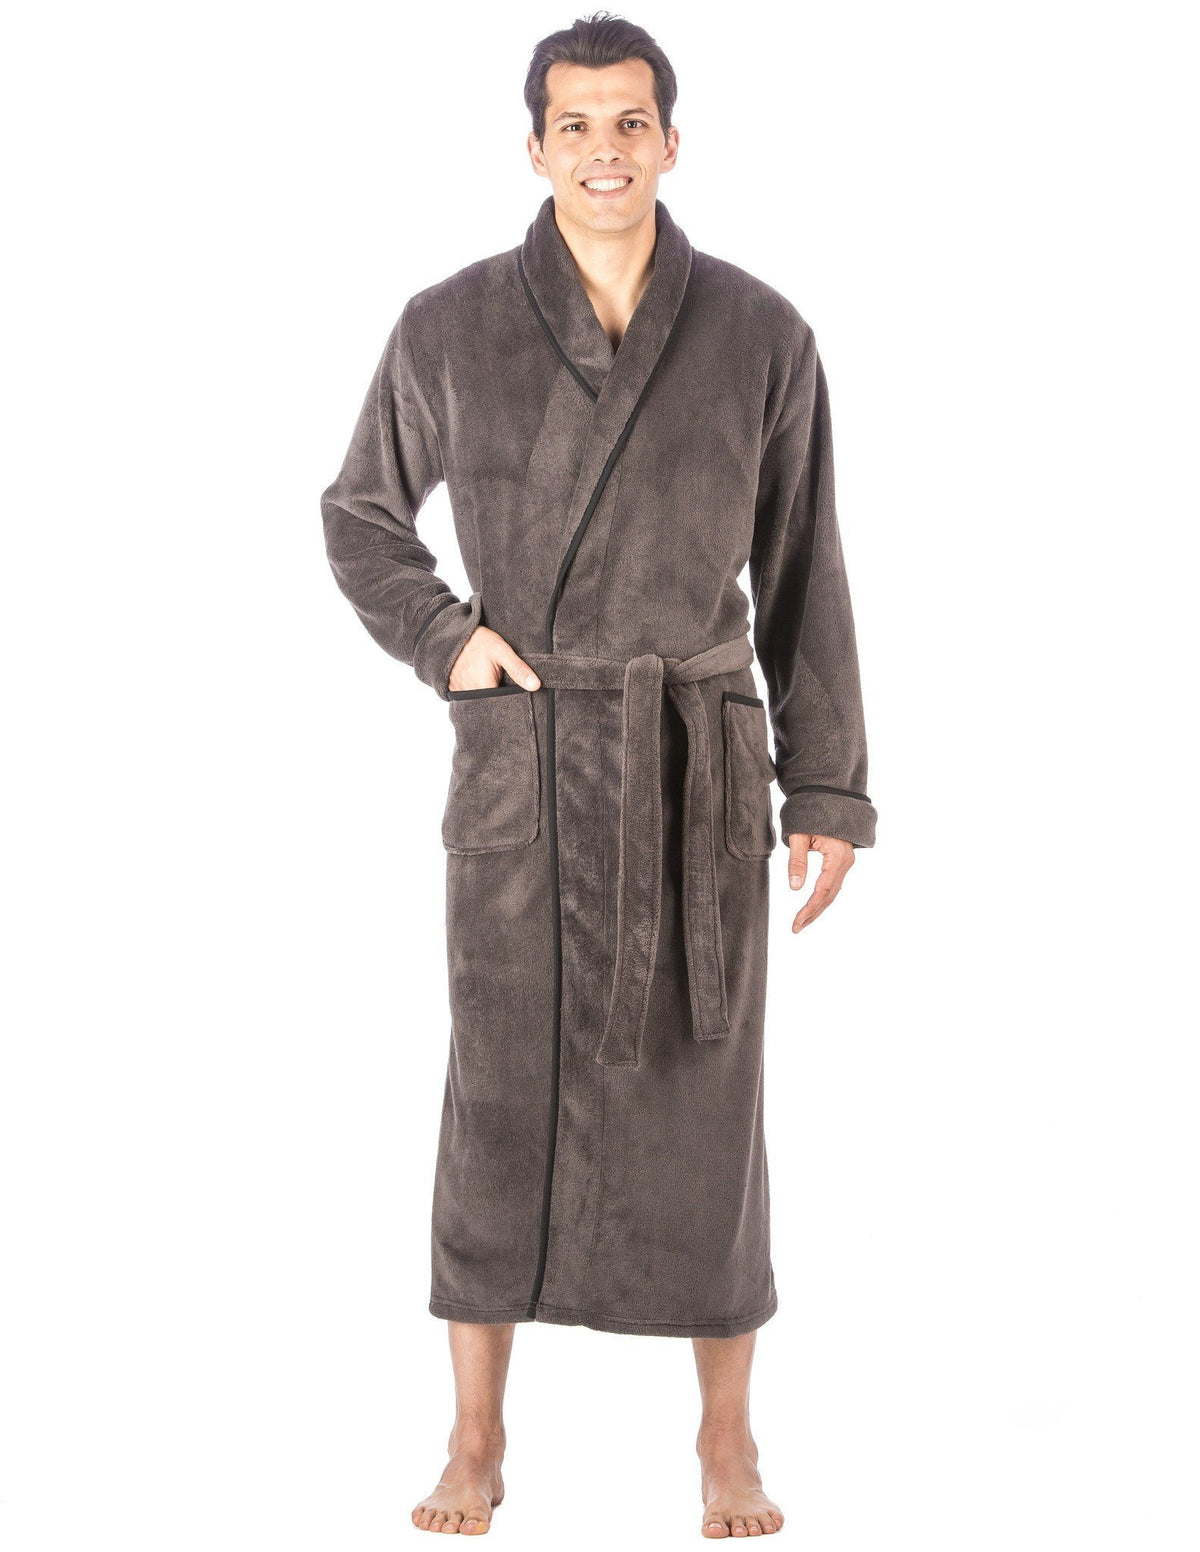 Men's Premium Coral Fleece Full Length Plush Spa/Bath Robe - Dark Grey